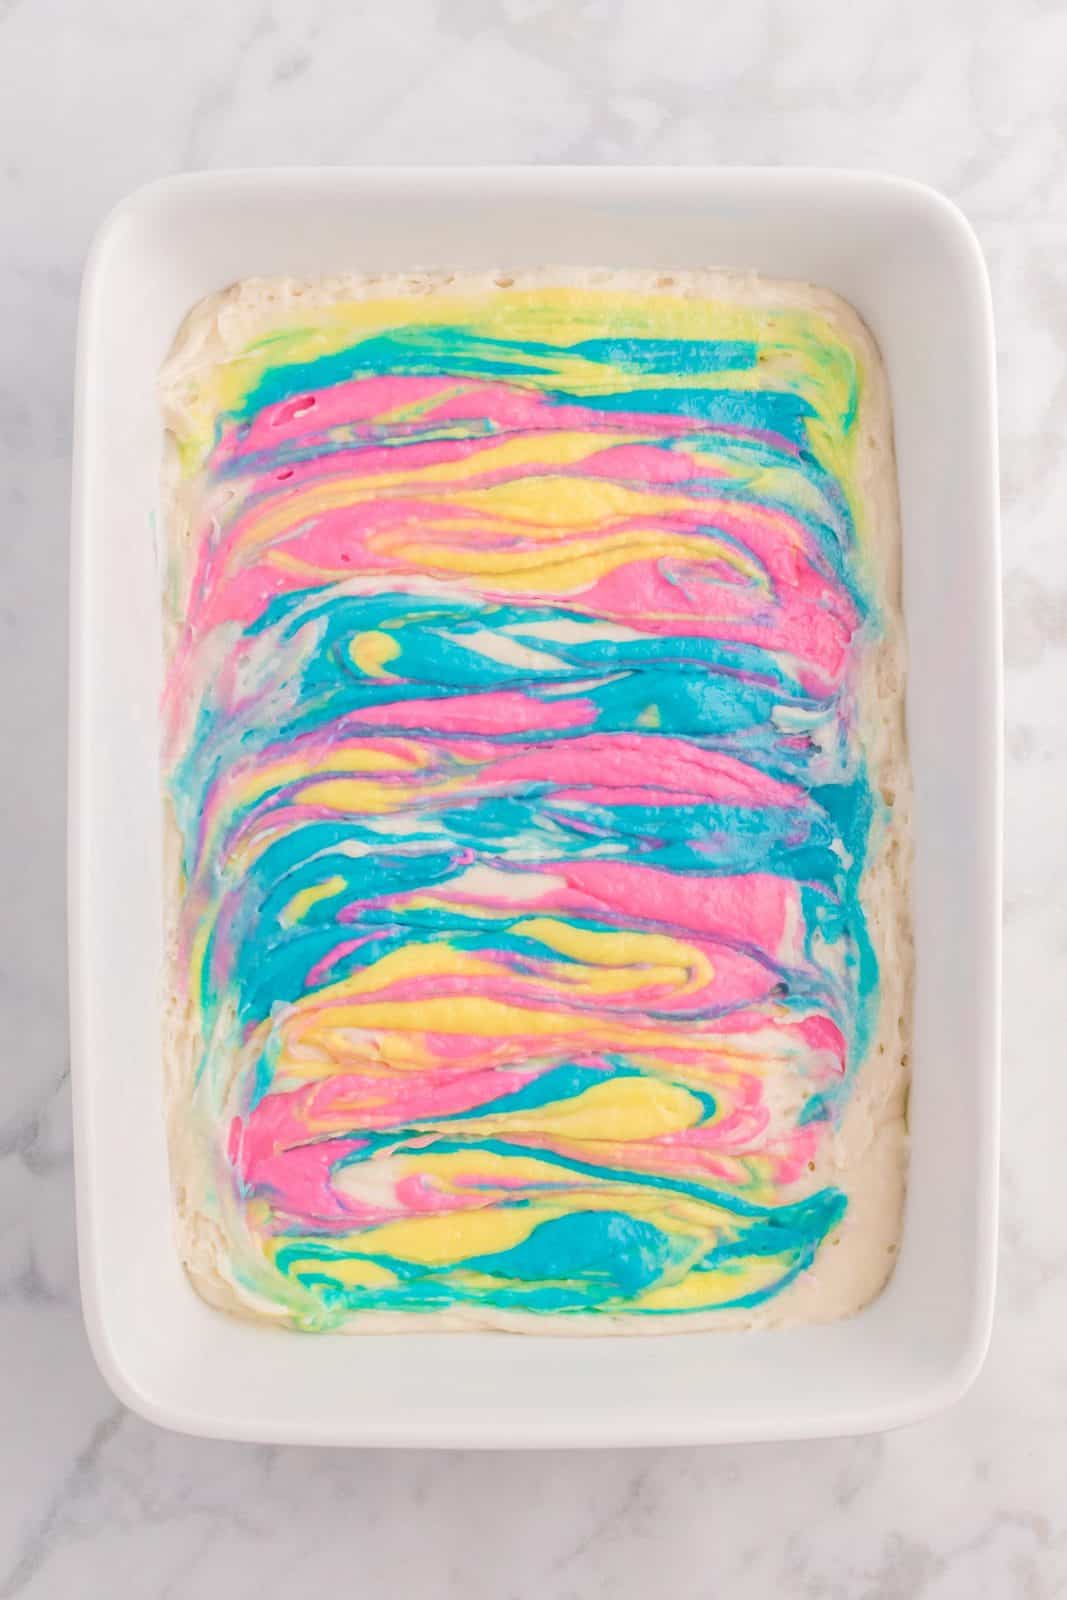 Colored cake mix swirled into cake batter.